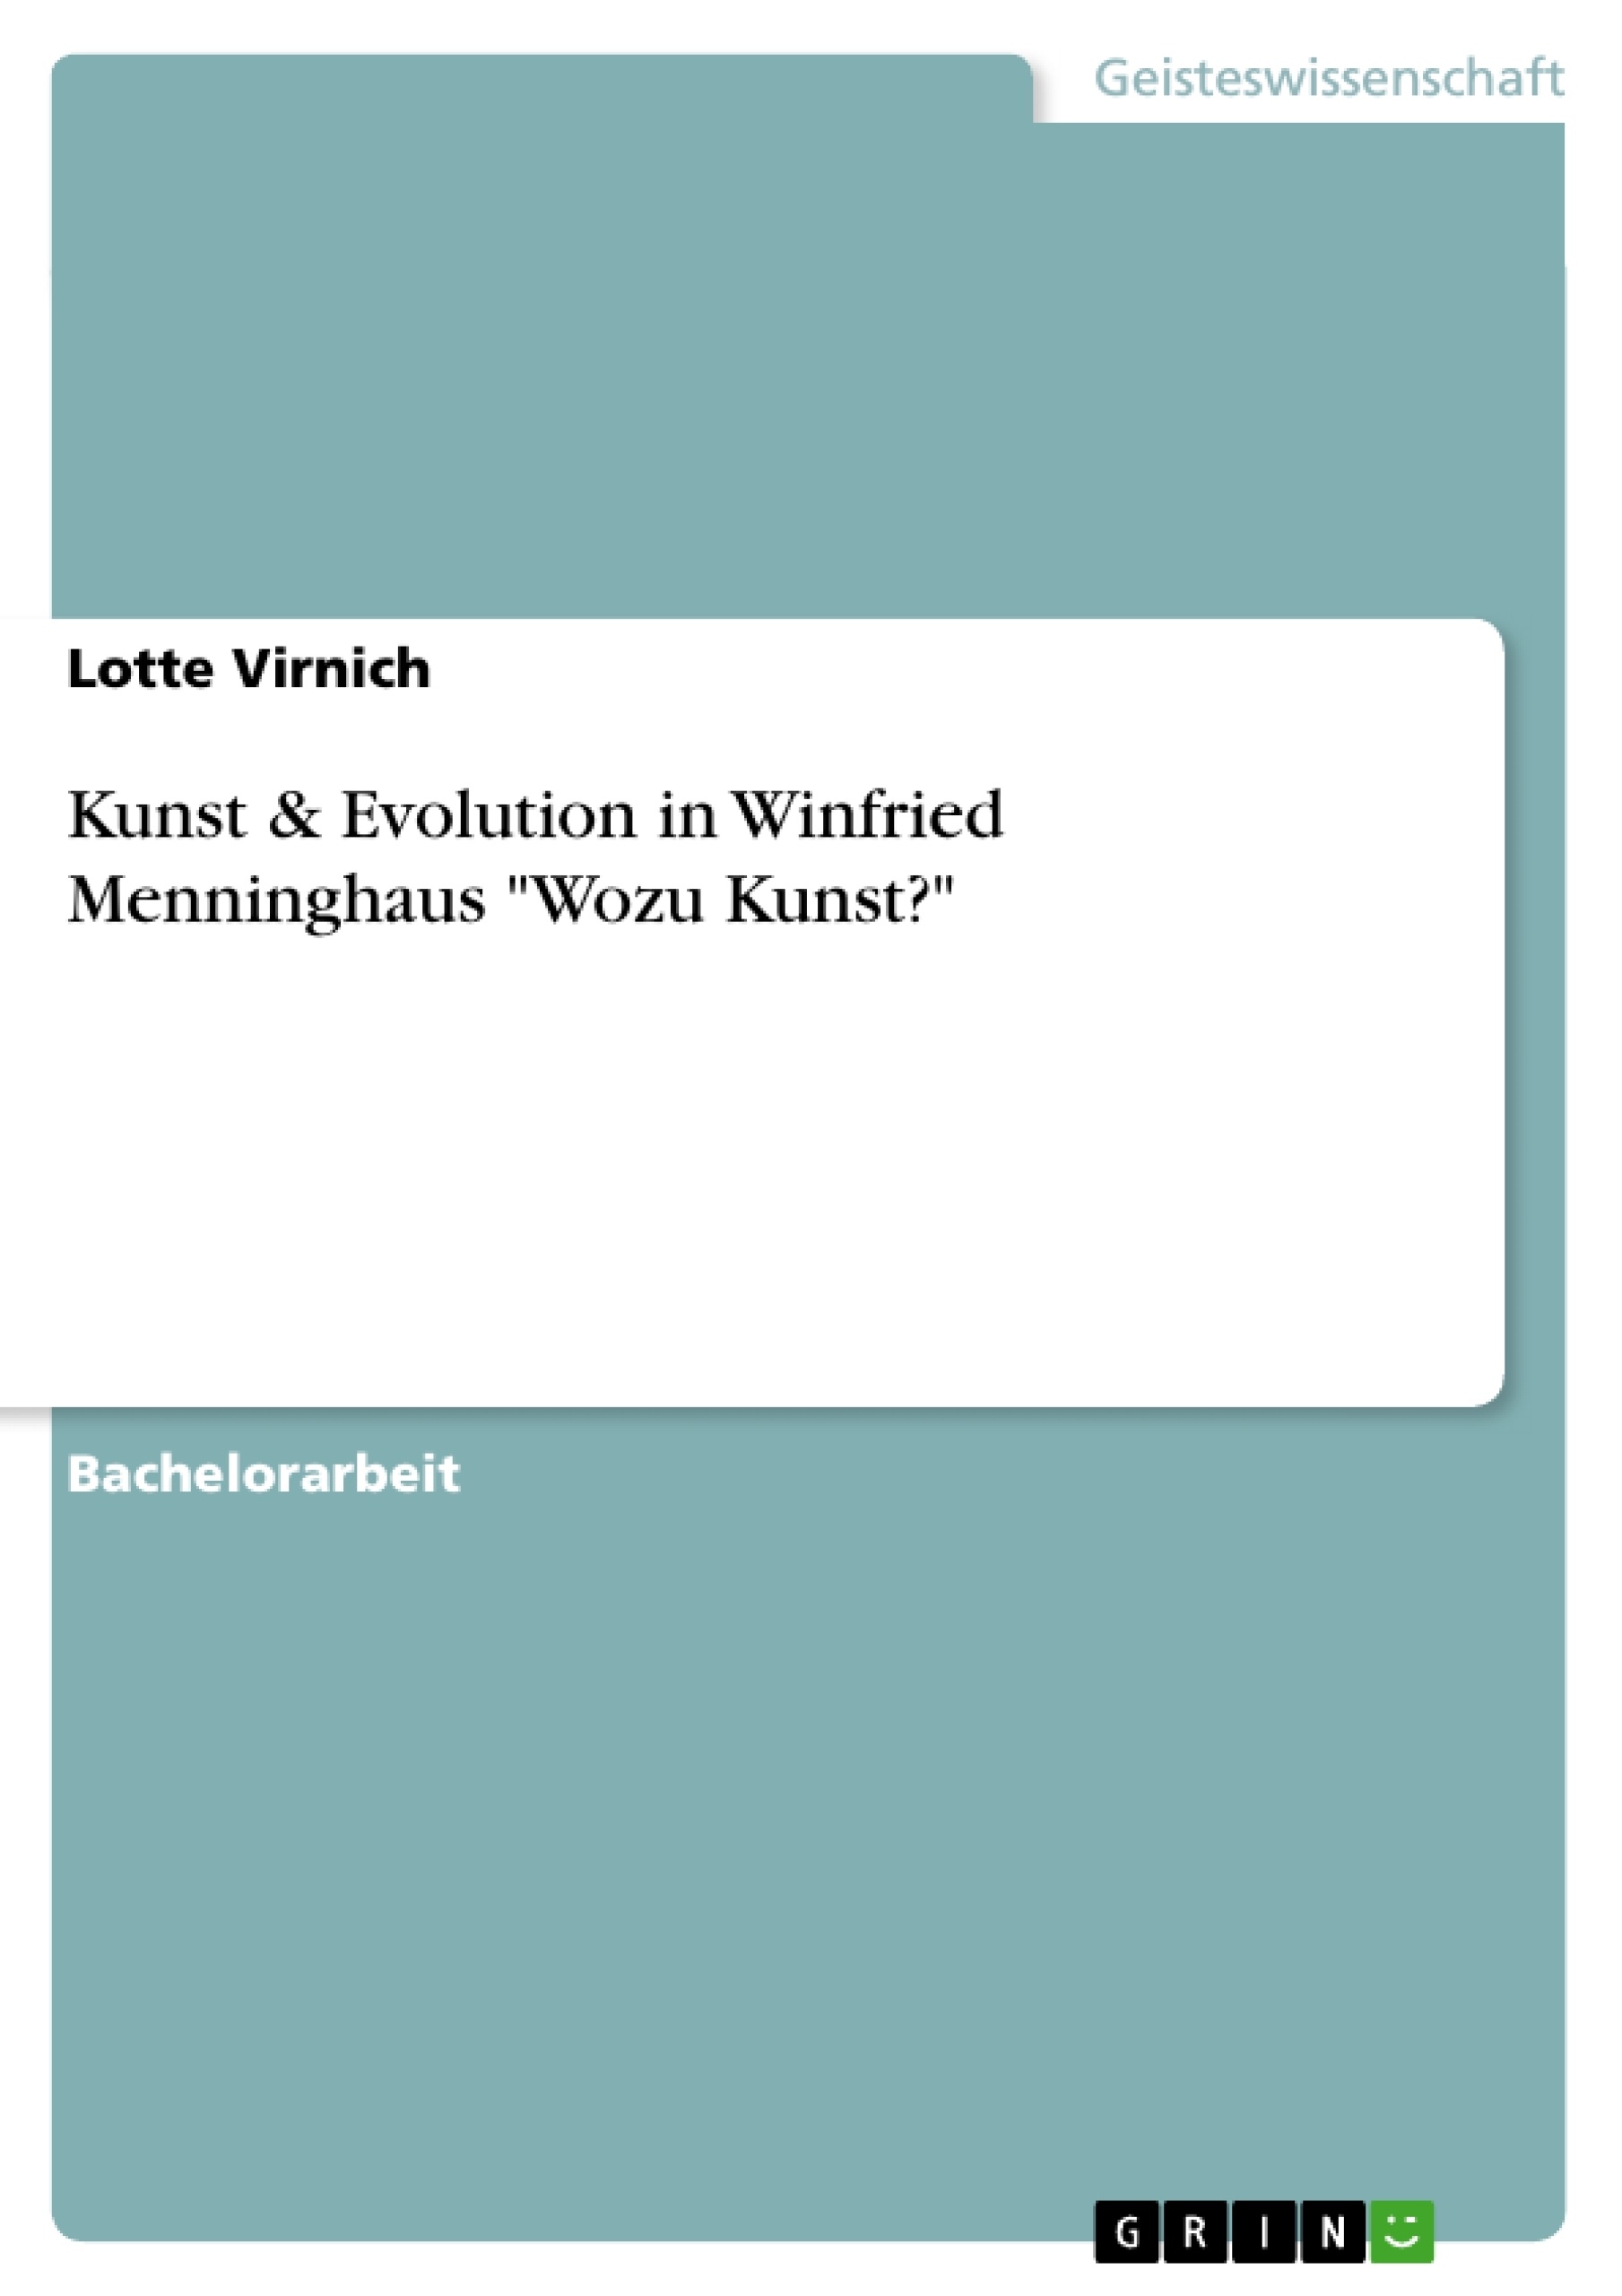 Título: Kunst & Evolution in Winfried Menninghaus "Wozu Kunst?"